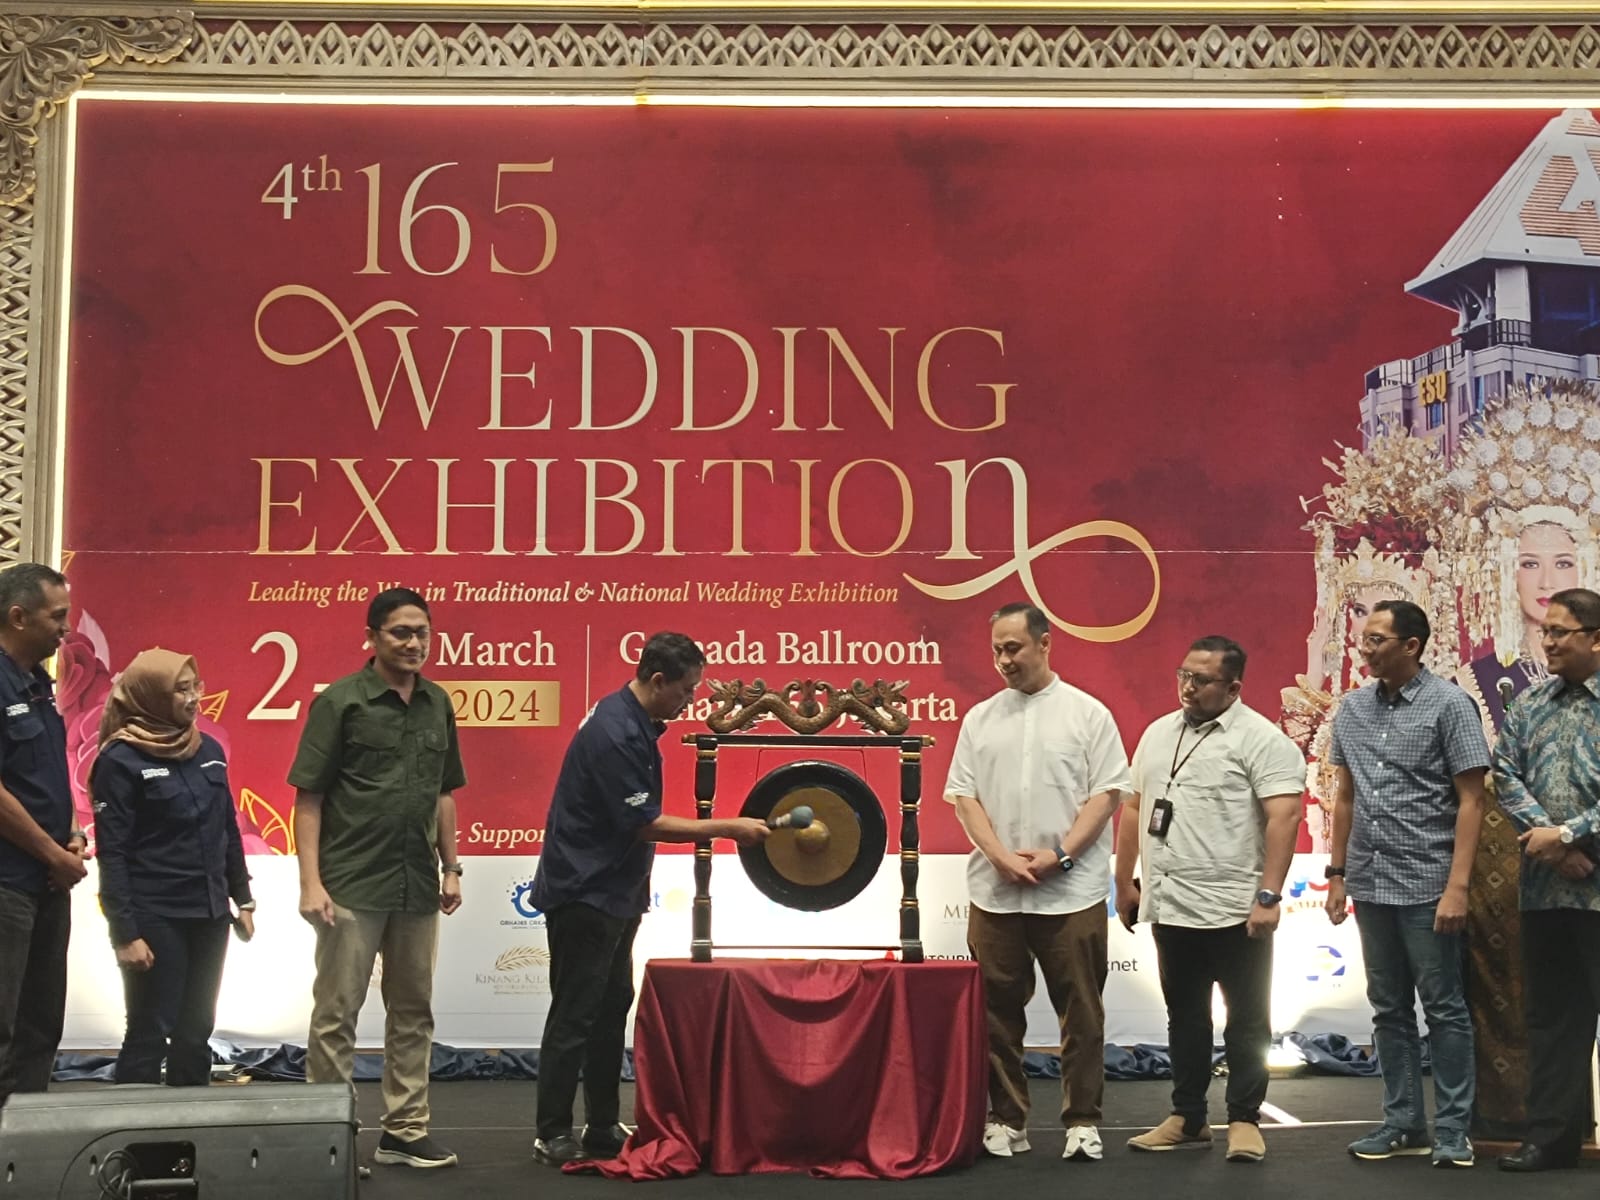 Calon Pengantin Wajib Datang, Ada Wedding Exhibition di Menara 165